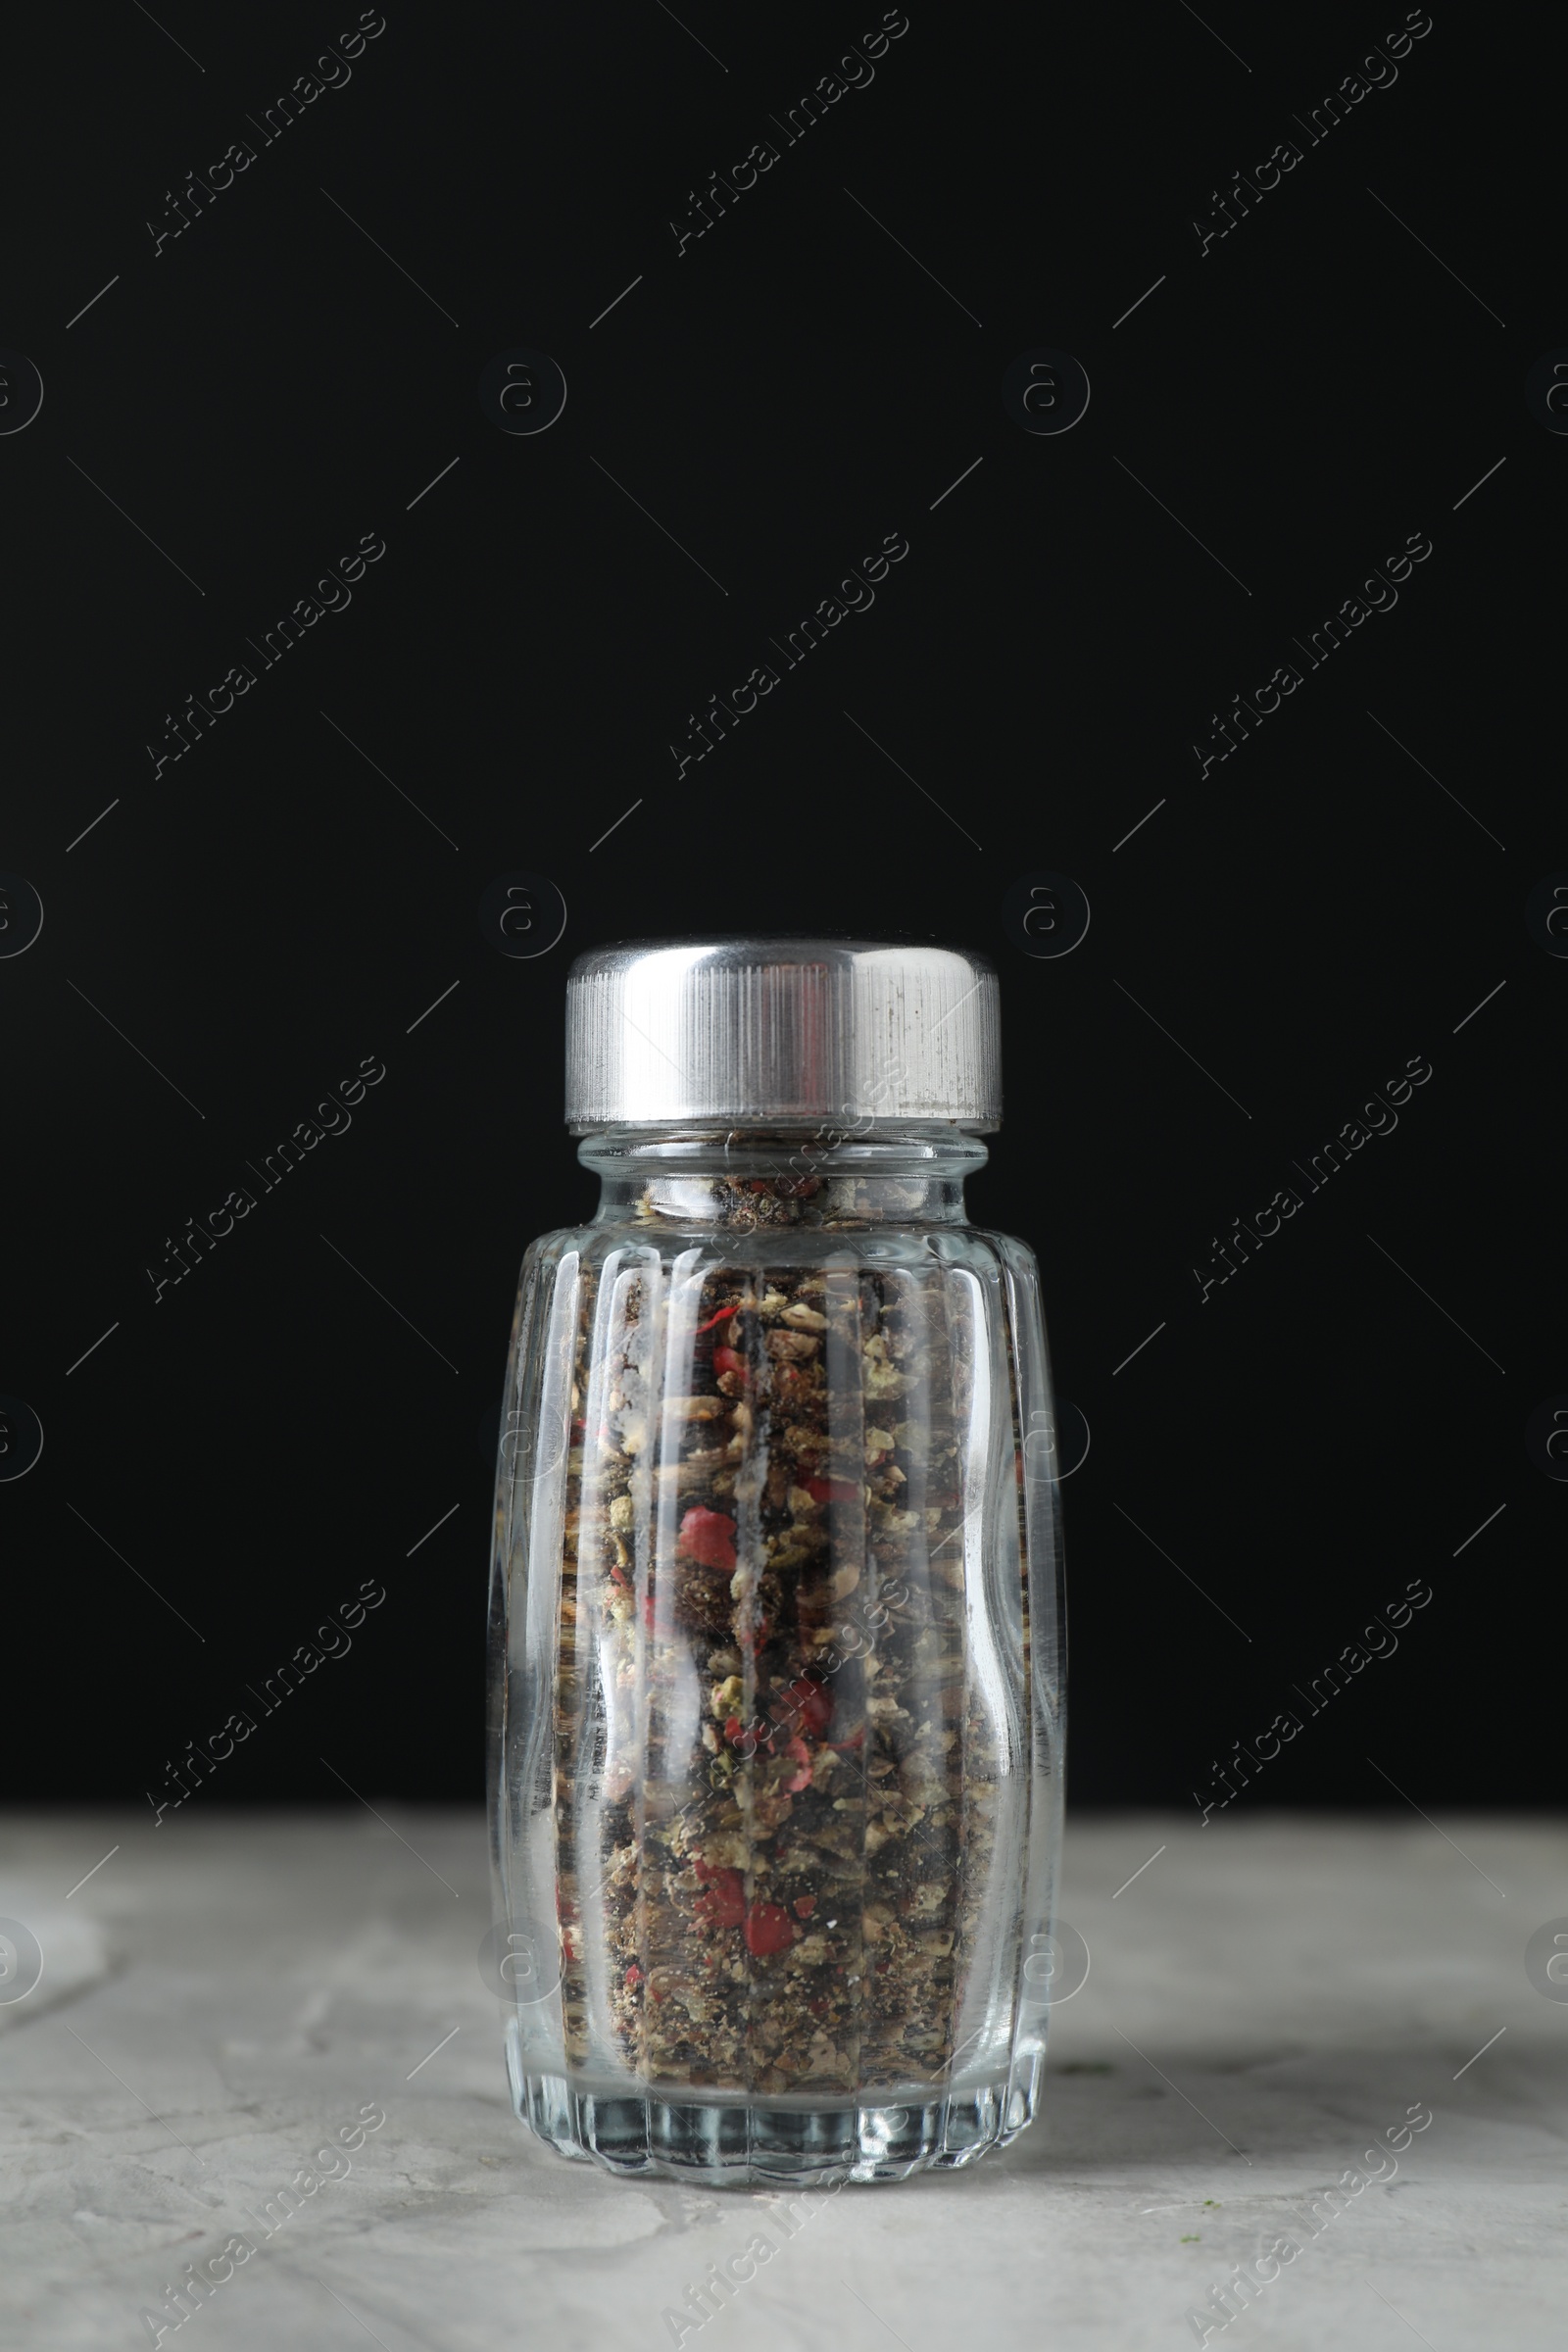 Photo of Pepper shaker on light textured table against black background